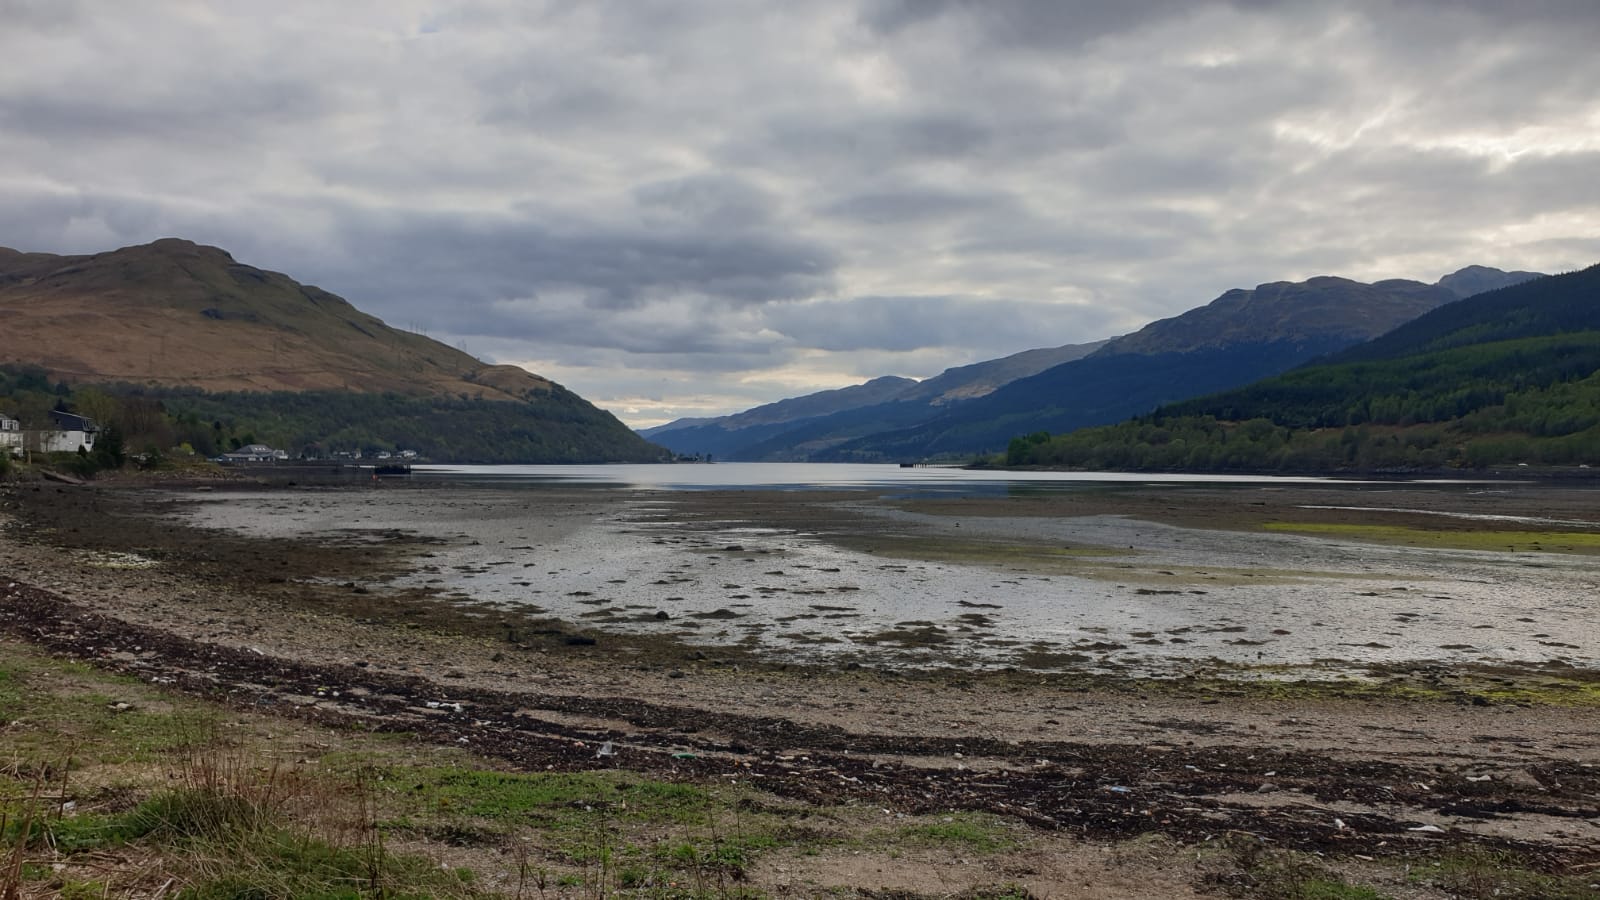 Nigel Allen VW - Landscape of Scotland - Cape to cape